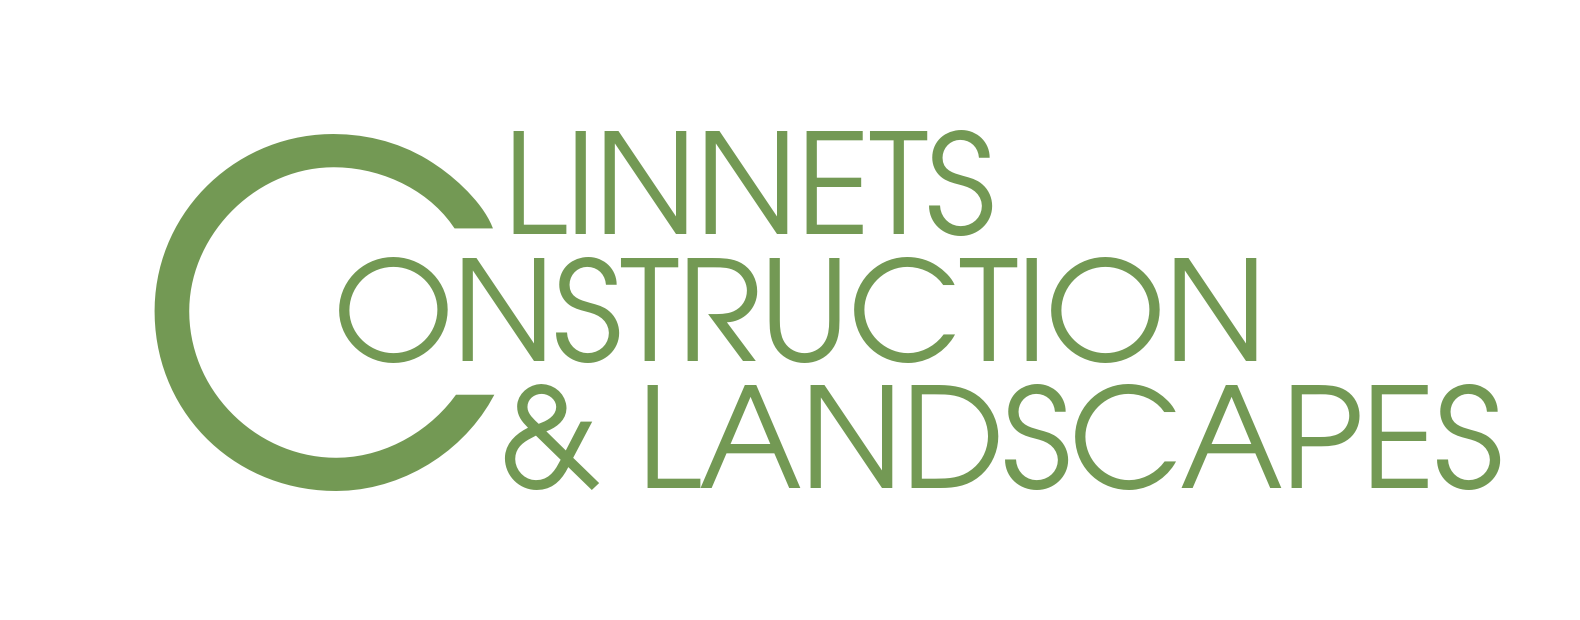 Linnets Construction